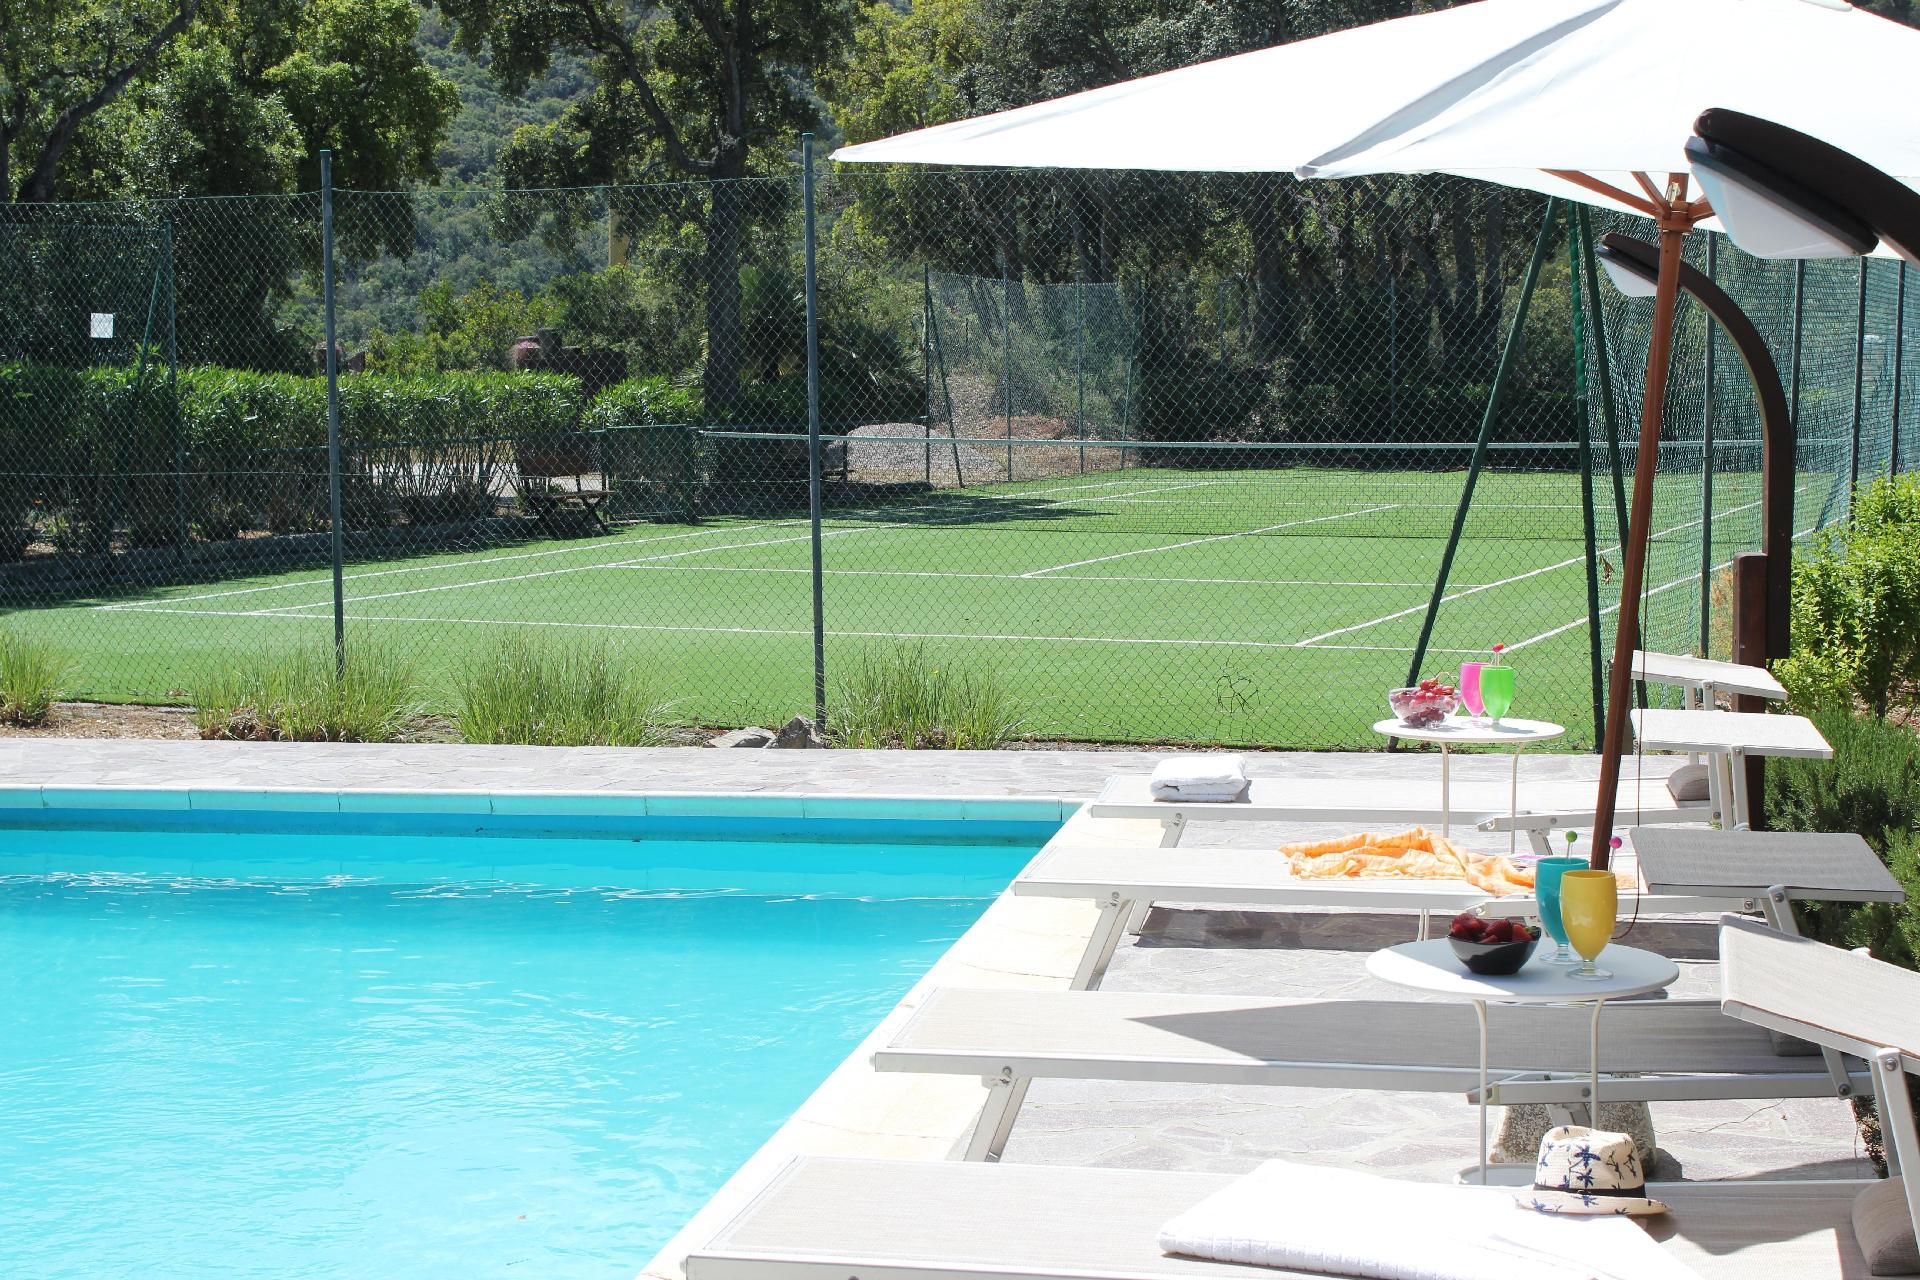 Private Villa mit Pool, Tennis, Pingpong 5 min zum  in Italien